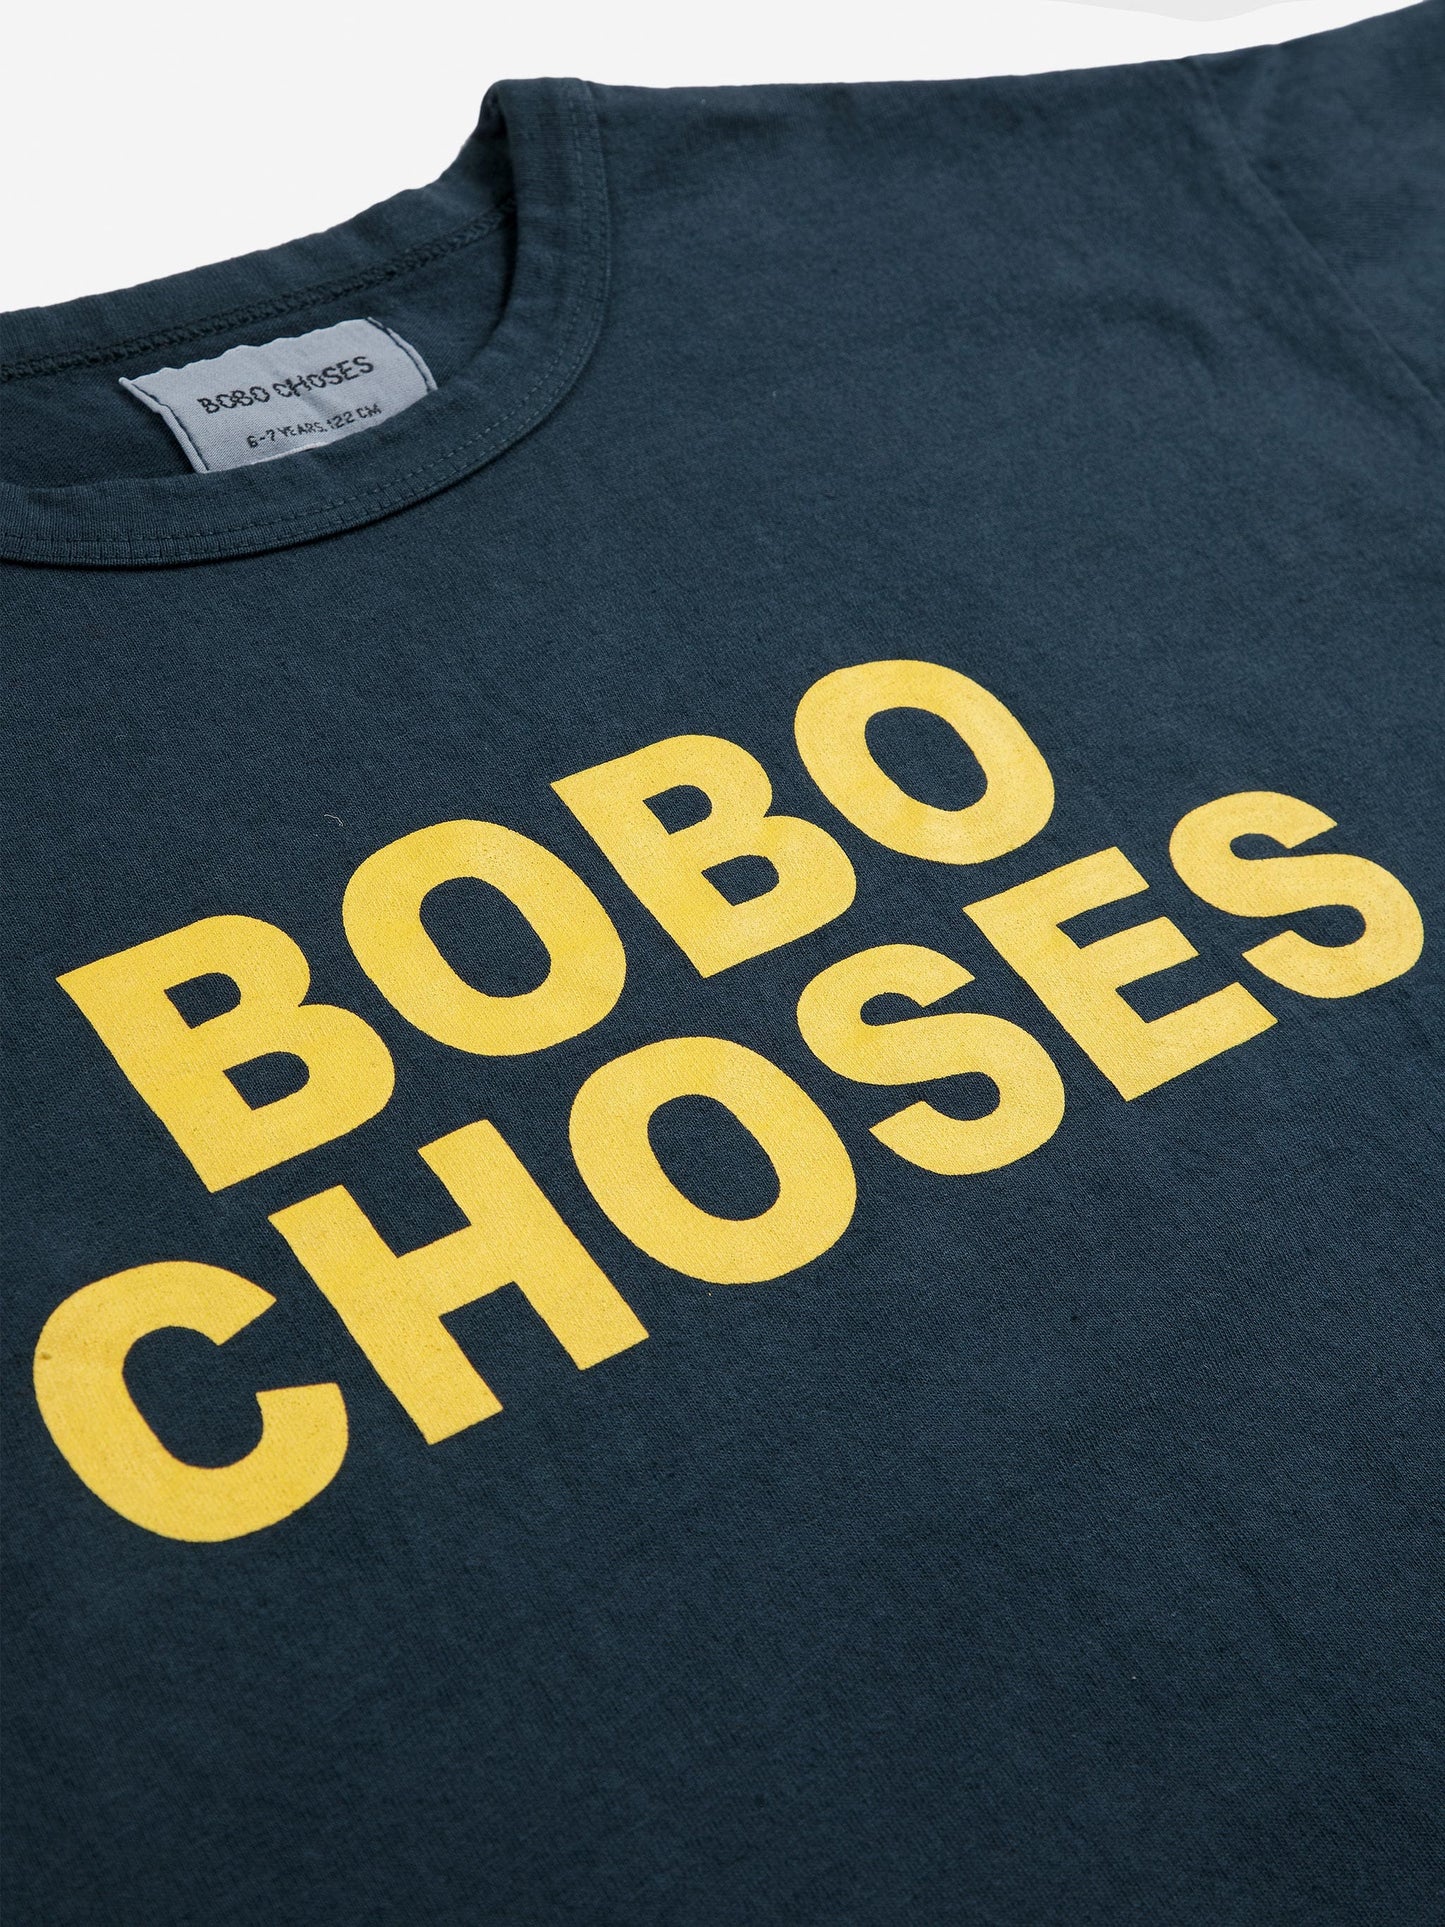 Camiseta azul marino Bobo Choses